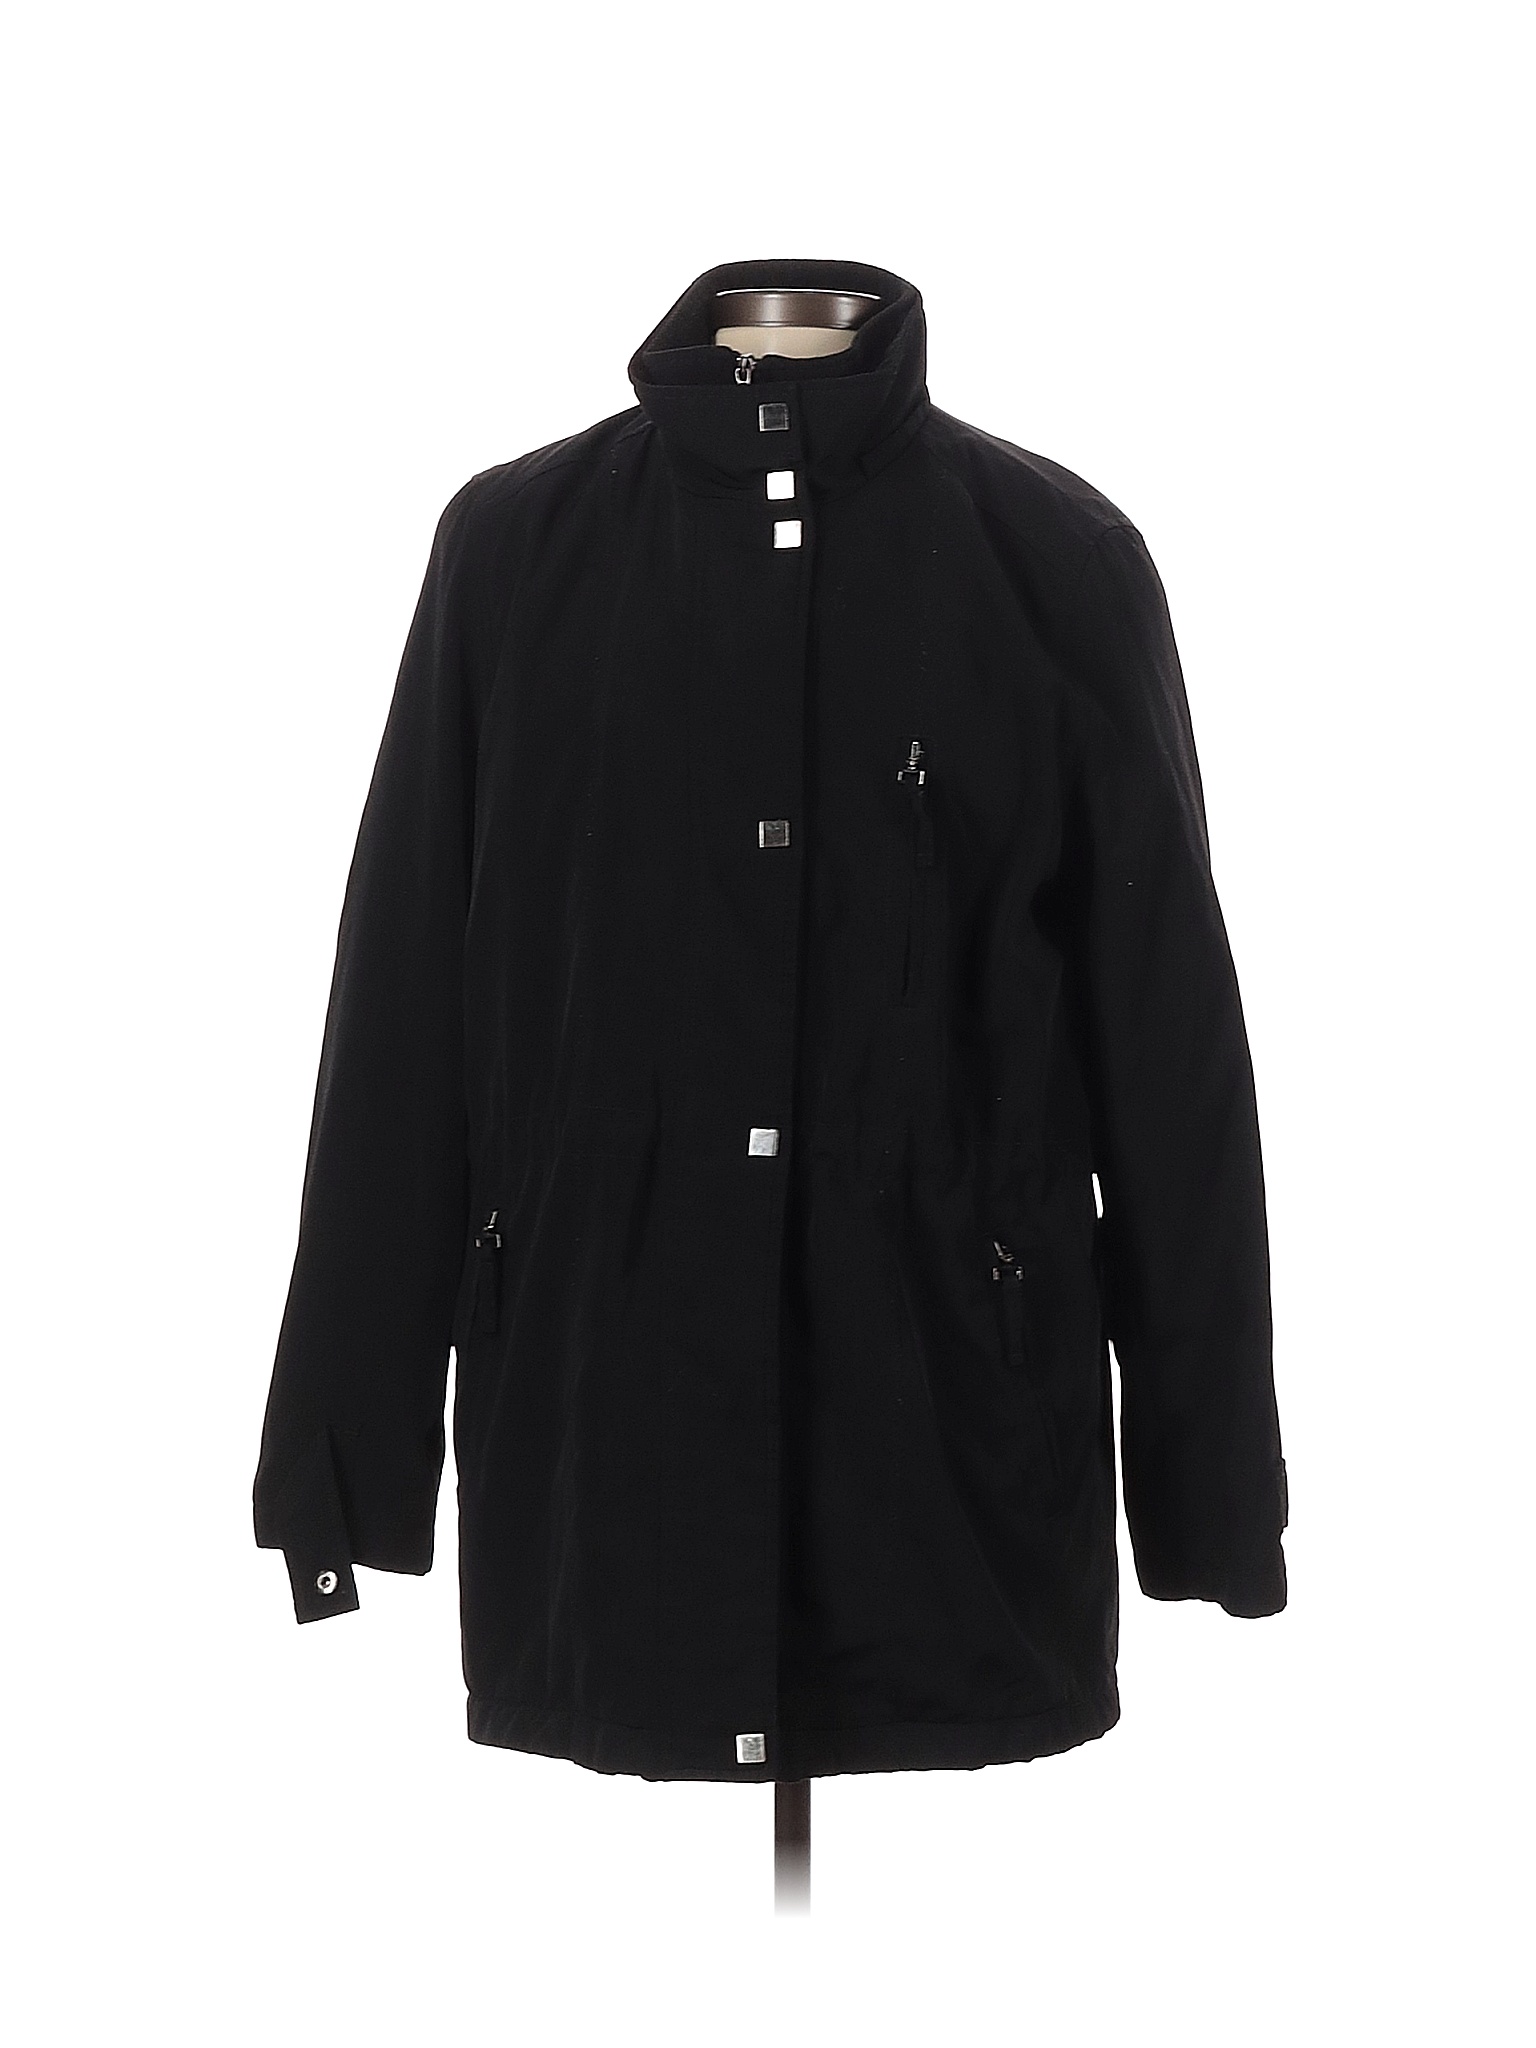 Braetan Solid Black Jacket Size S - 79% off | thredUP